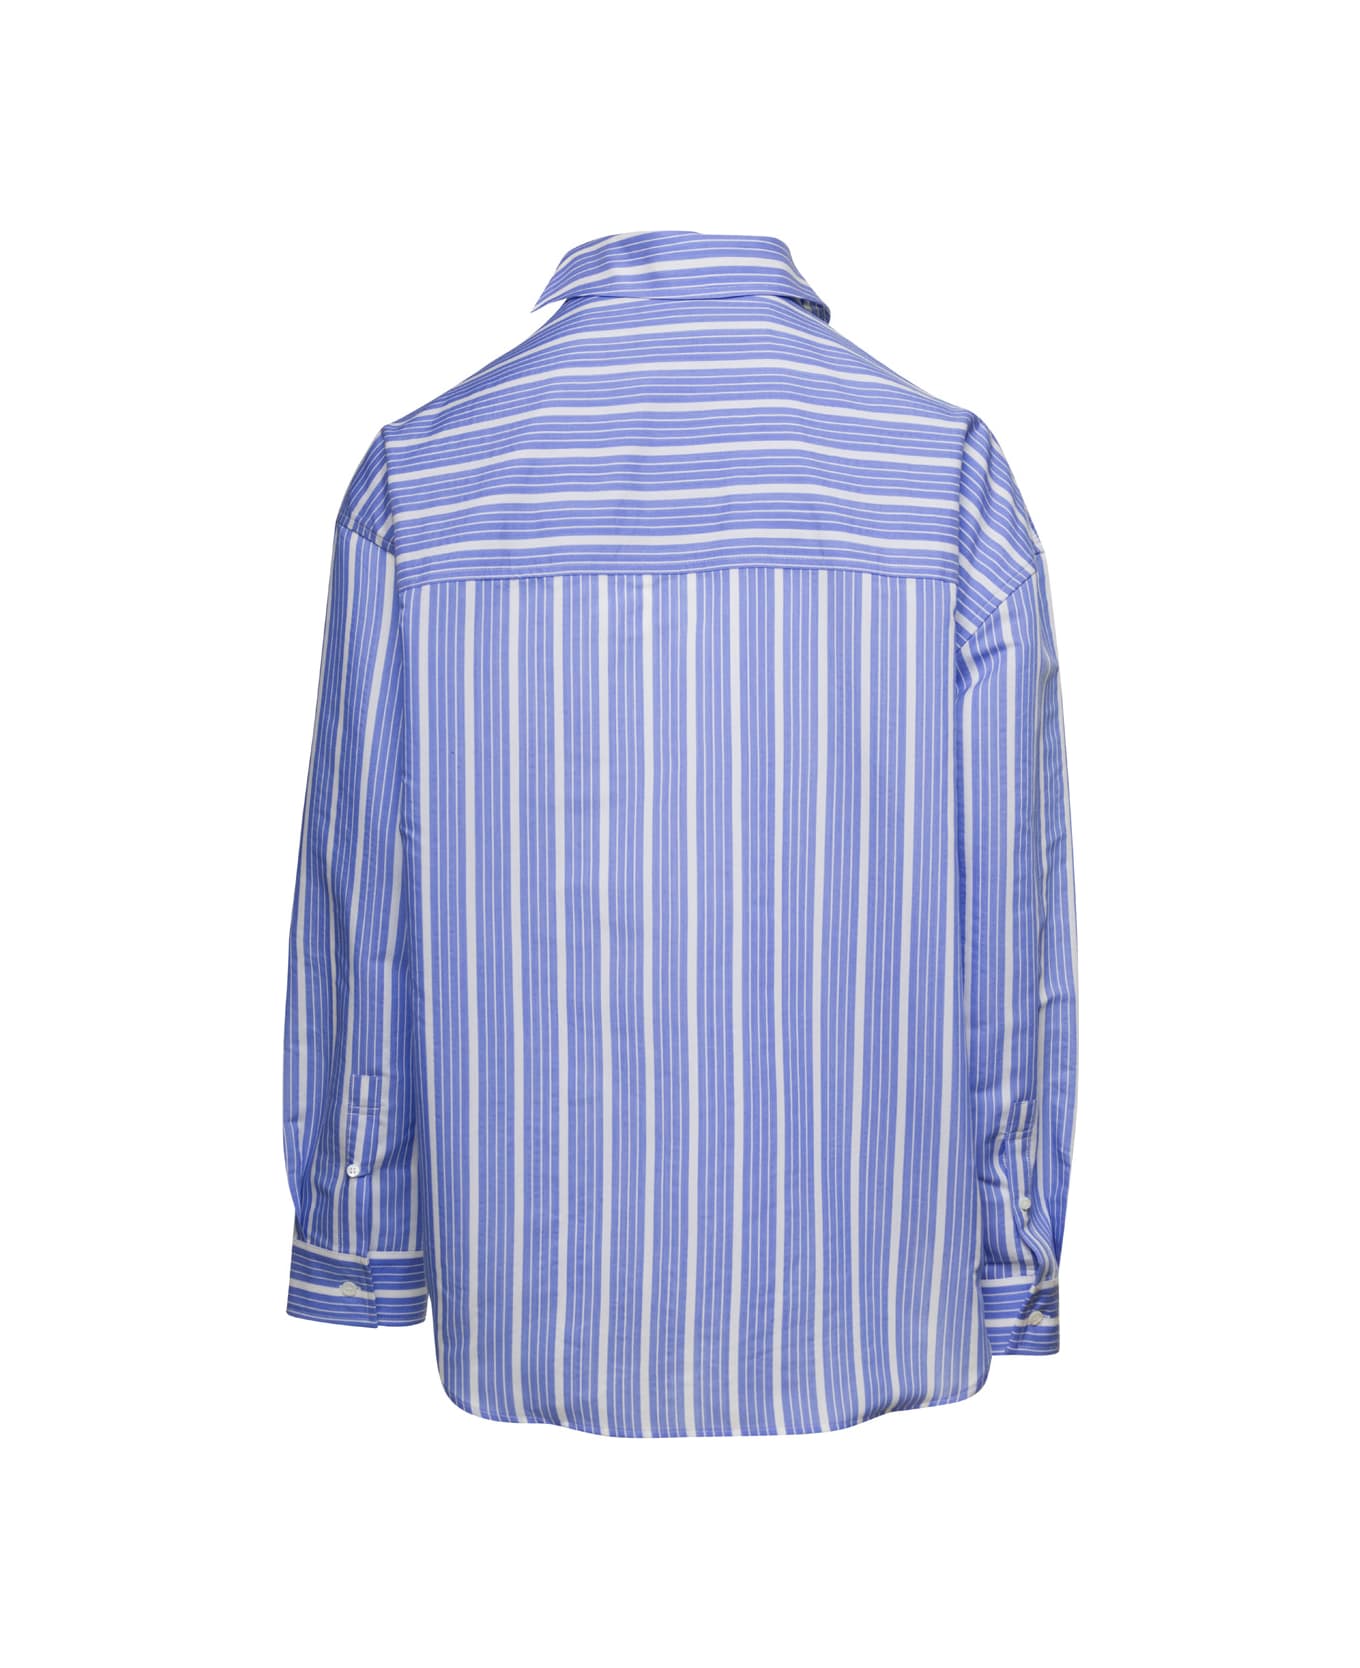 Jacquemus Cuadro Striped Silk-blend Shirt - Jcqud bus. lg stp blue/wh